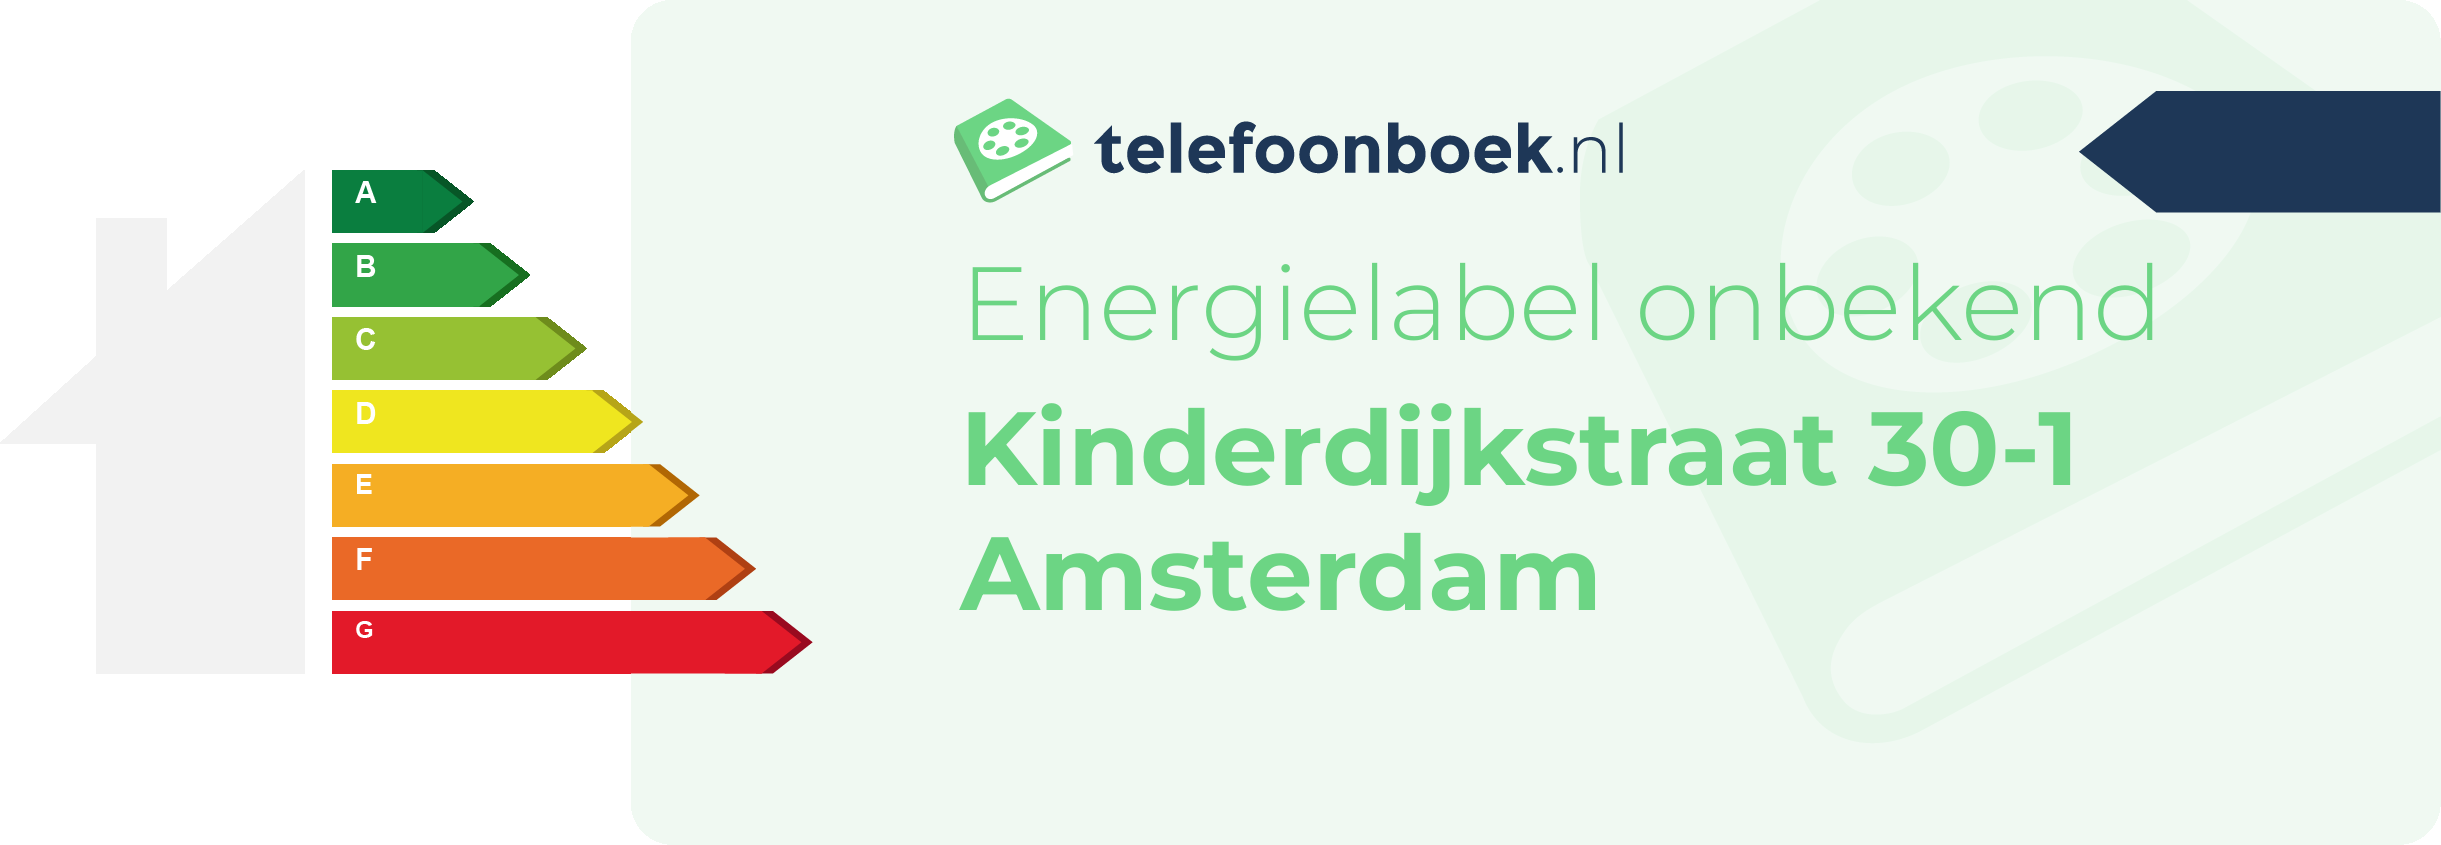 Energielabel Kinderdijkstraat 30-1 Amsterdam